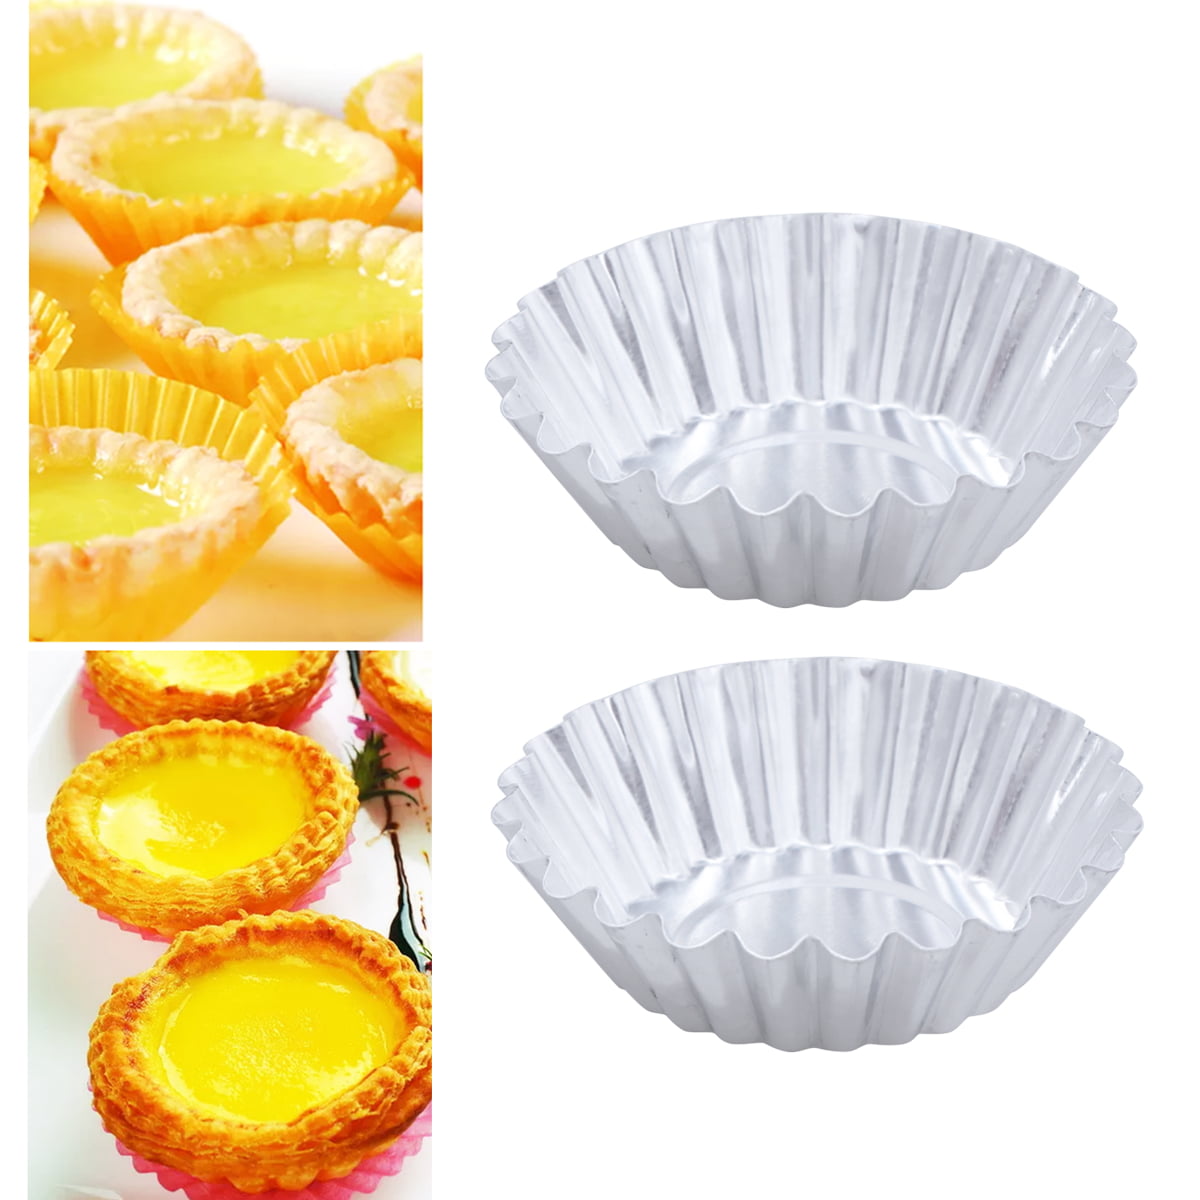 Details about   30 Pcs Egg Tart Molds Non Stick Reusable Ripple Baking Moulds for Dessert House 